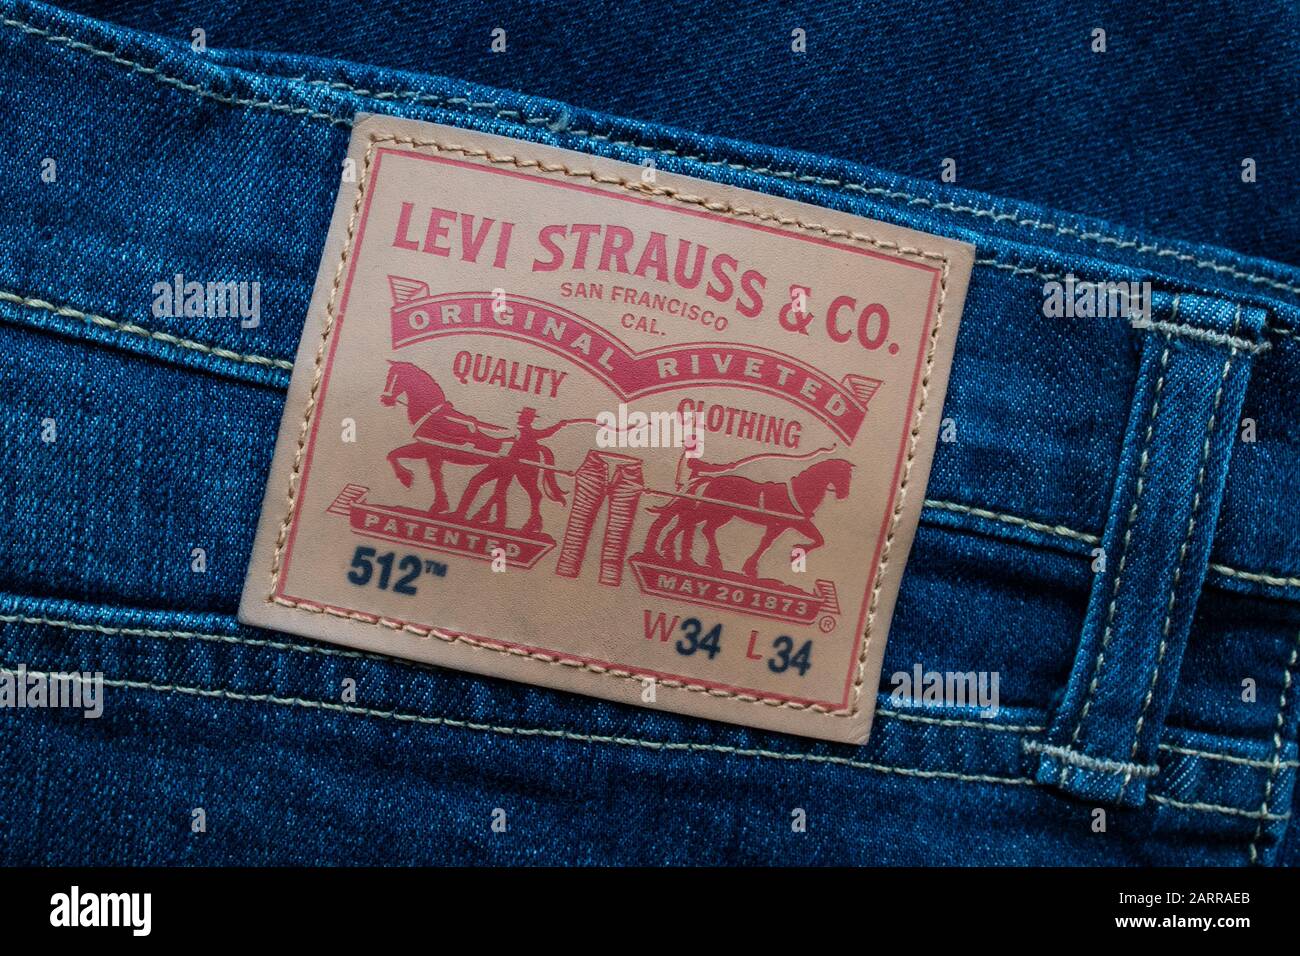 Levi strauss co jeans label fotografías e imágenes de alta resolución -  Alamy